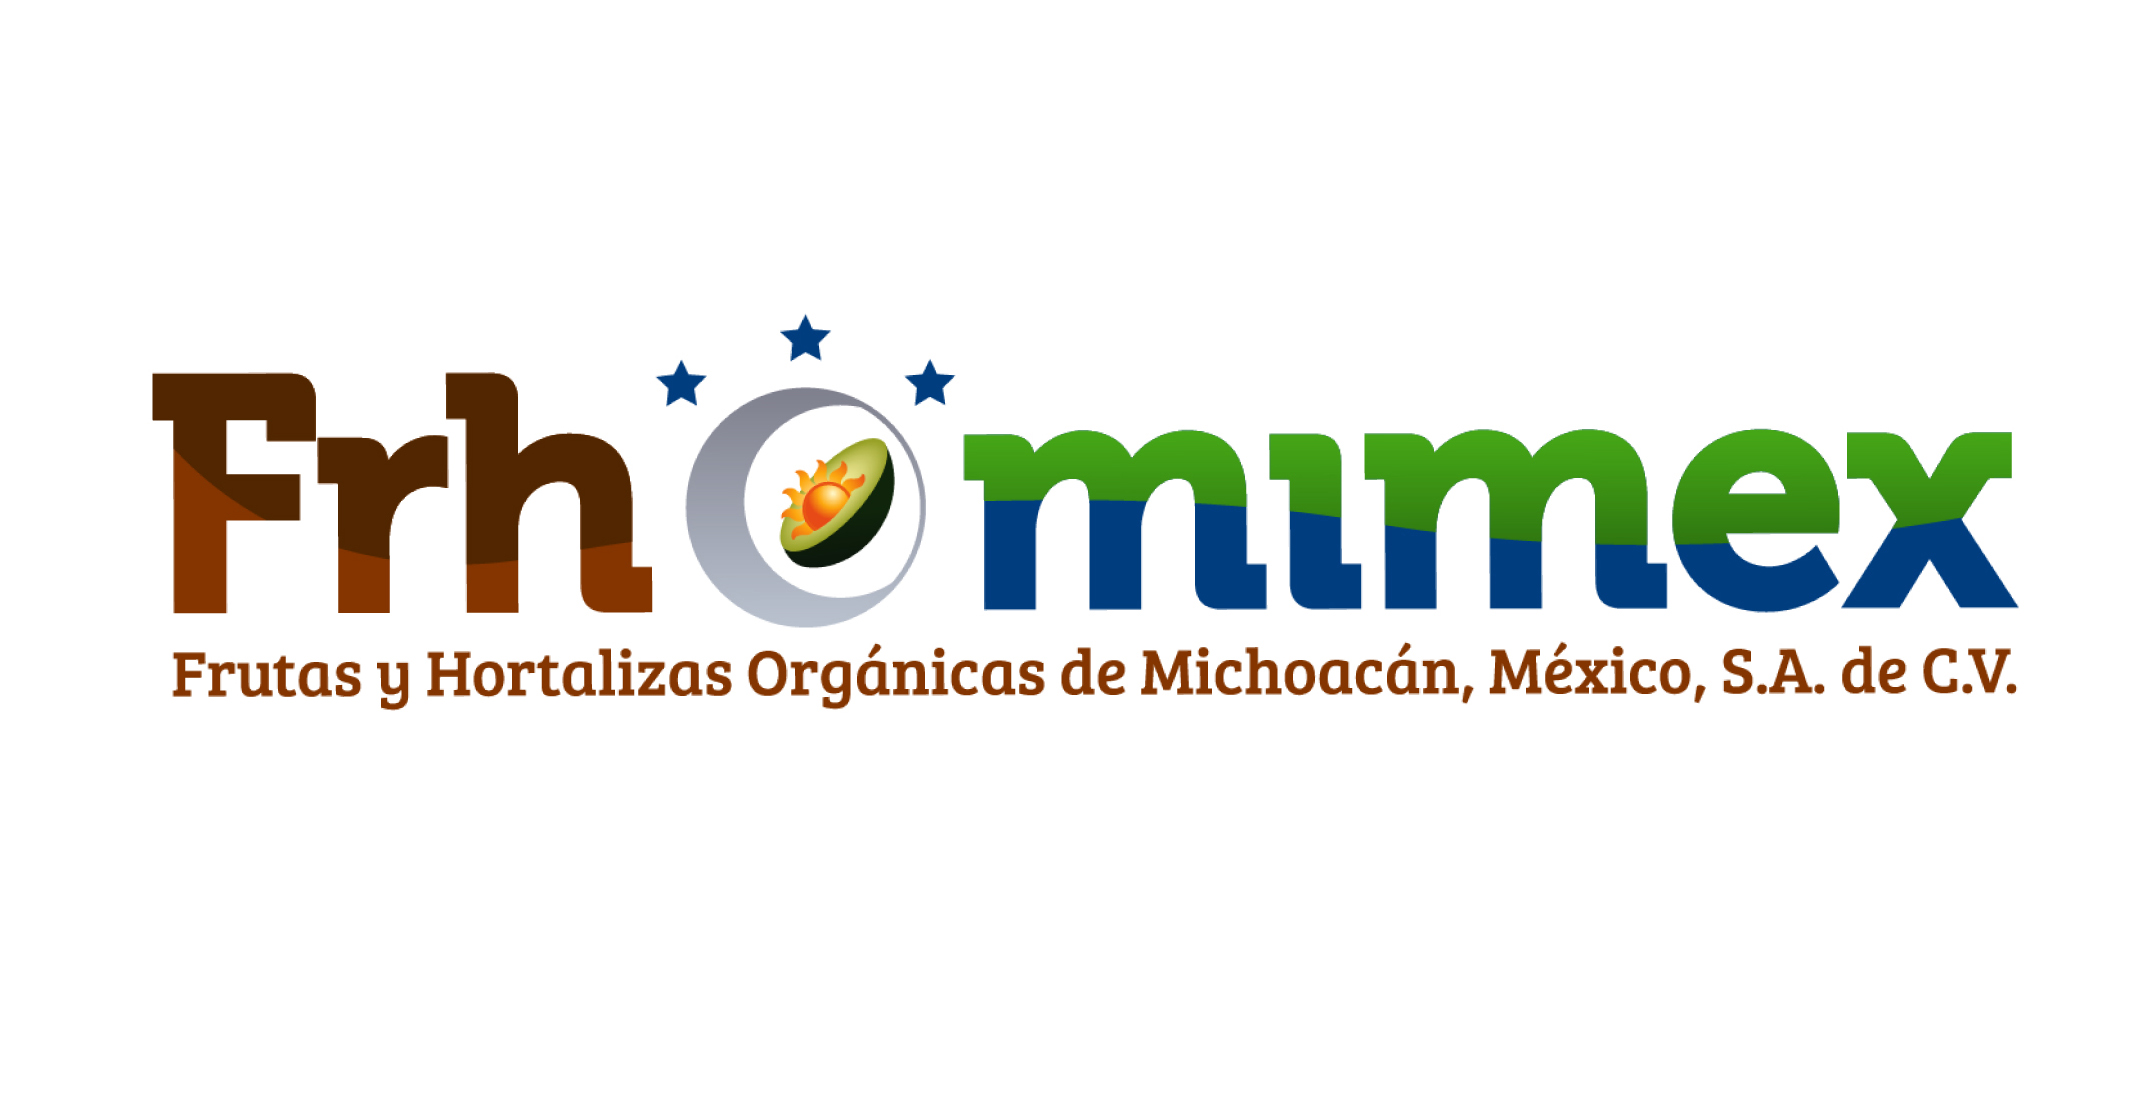 Logo - frhomimex.jpg